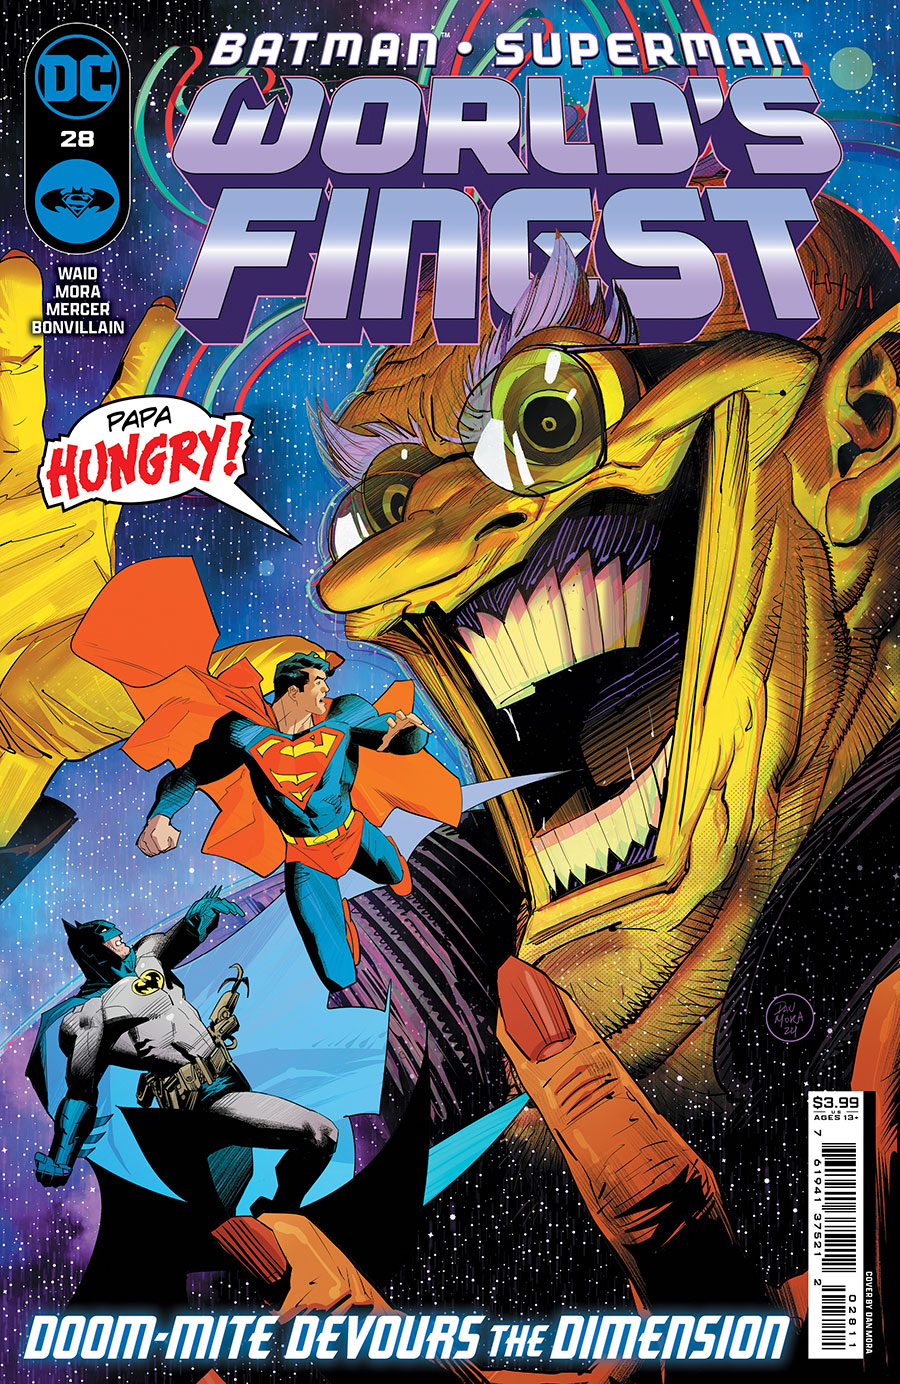 Batman Superman Worlds Finest #28 Cover A Regular Dan Mora Cover